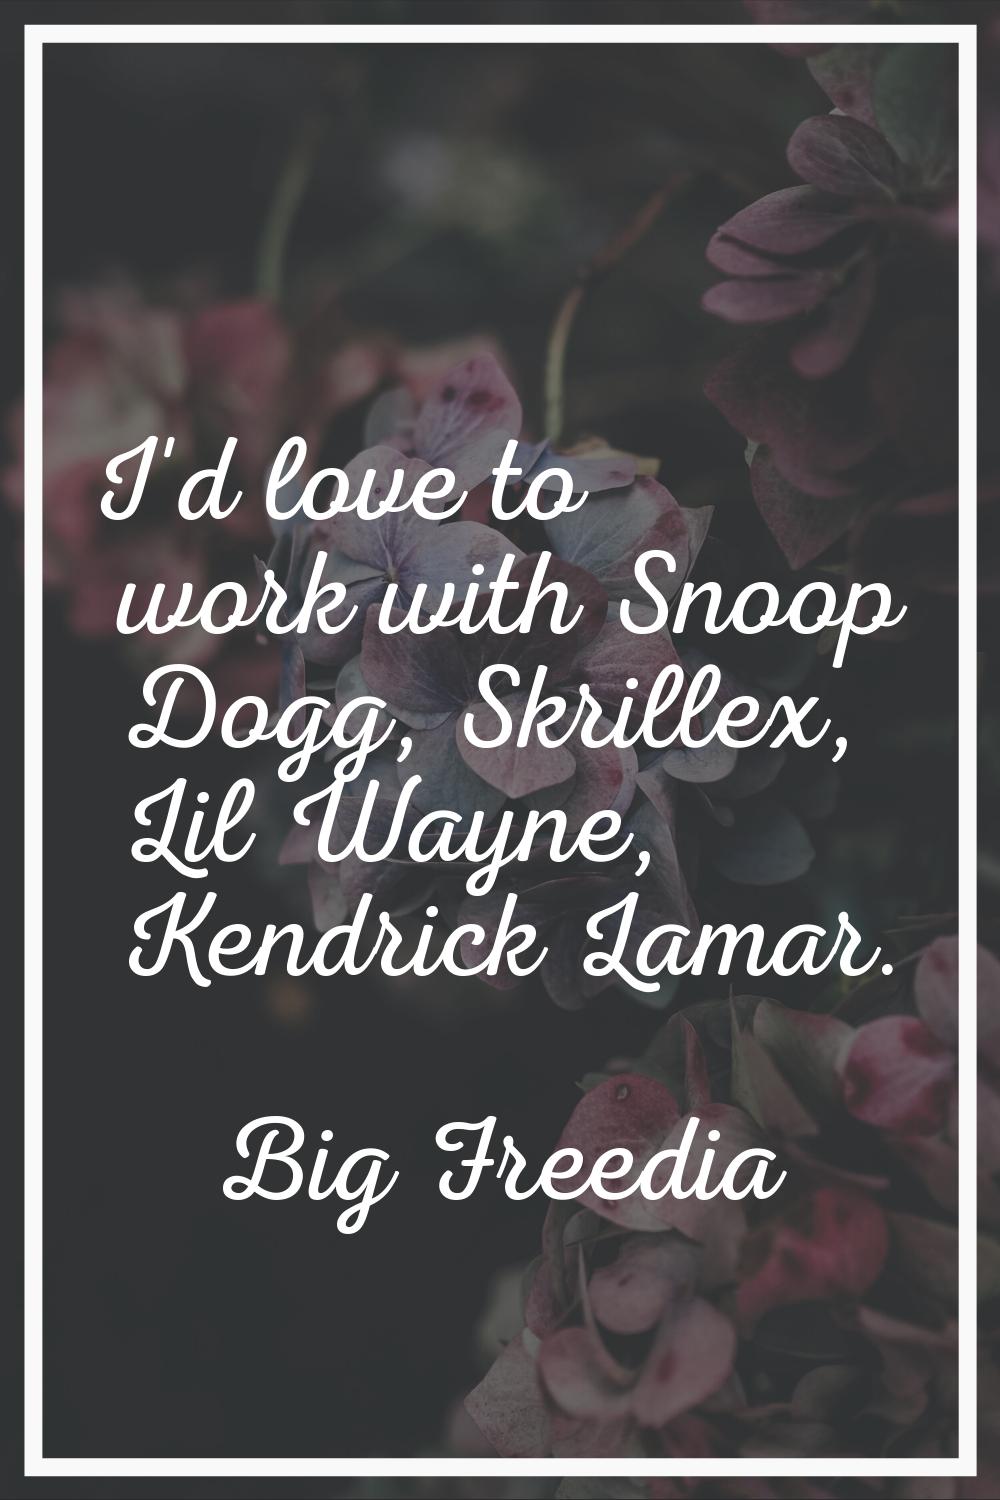 I'd love to work with Snoop Dogg, Skrillex, Lil Wayne, Kendrick Lamar.